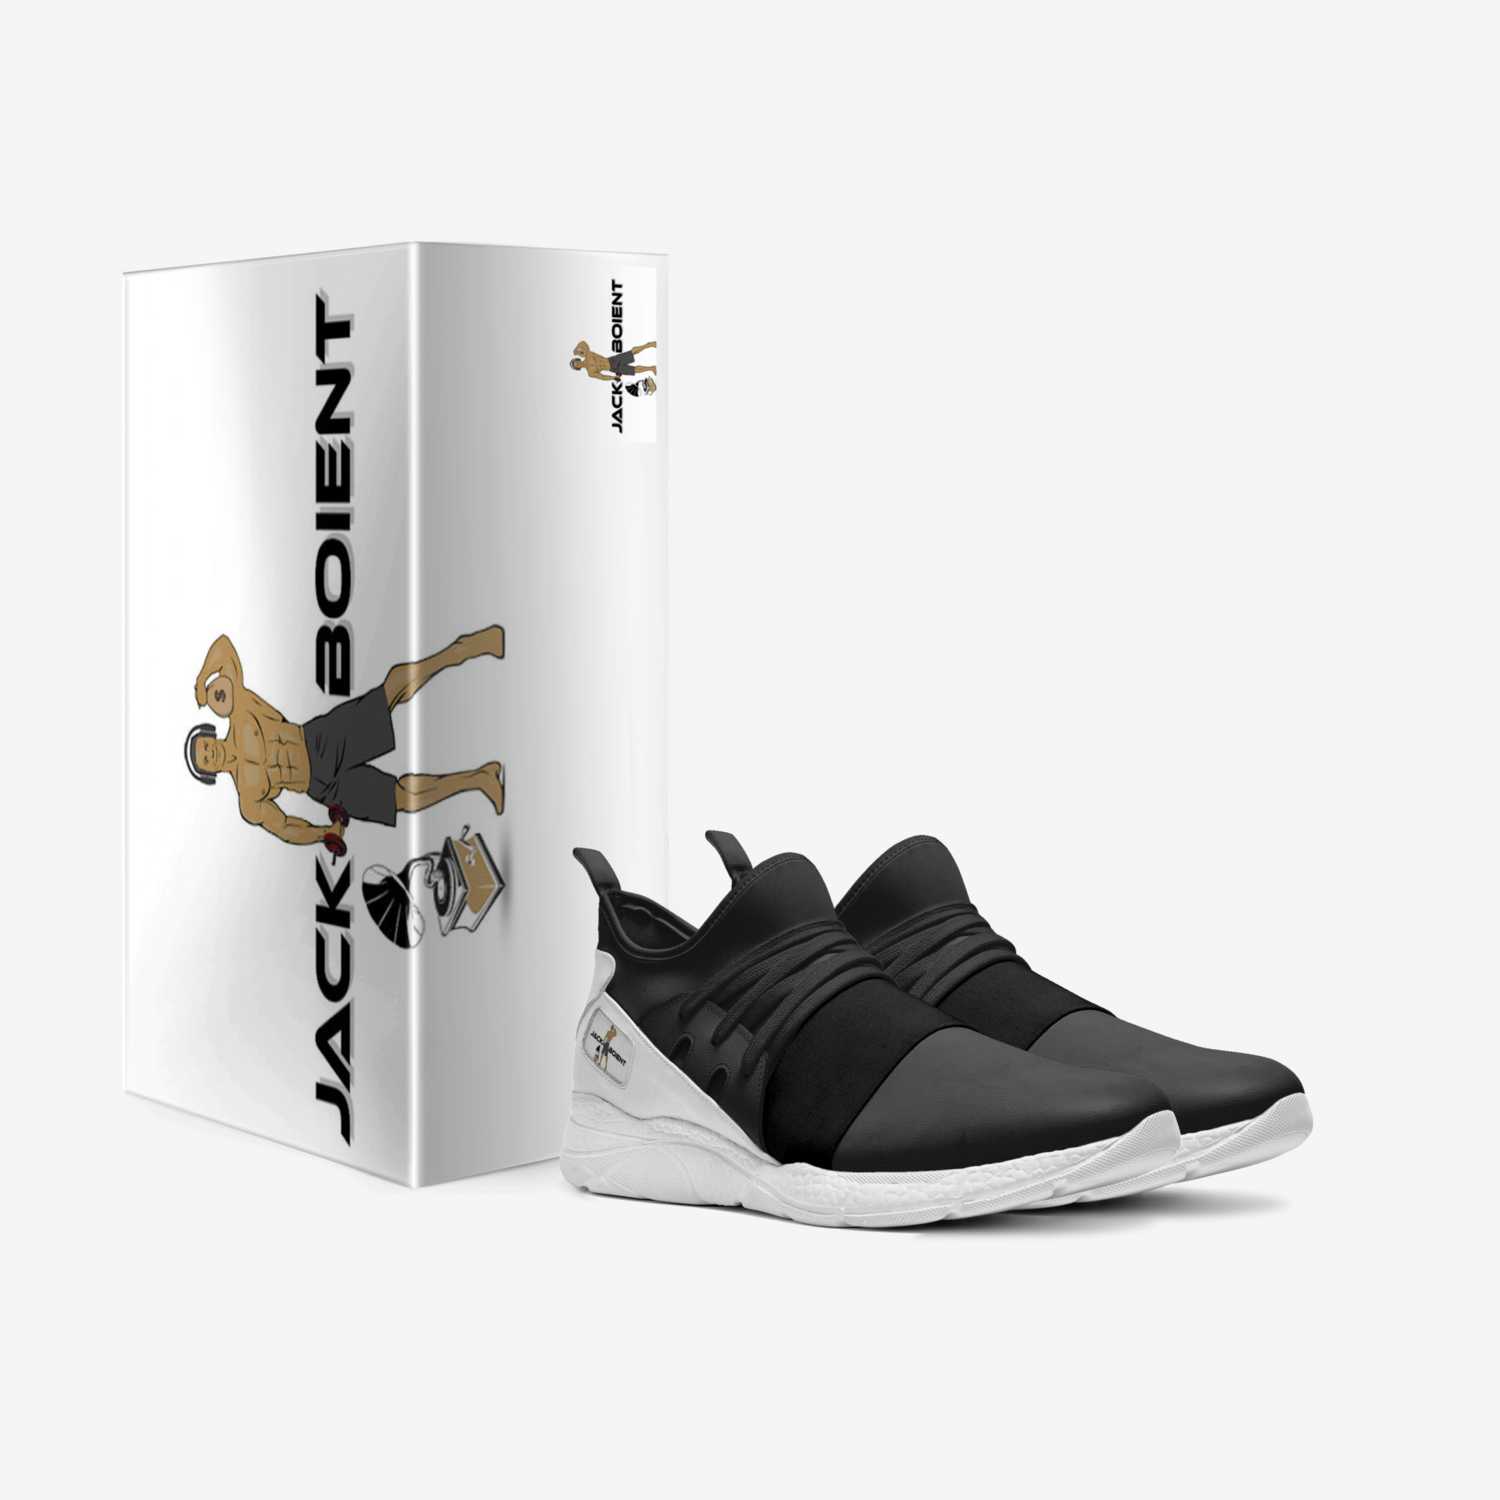 Jackboi Styles custom made in Italy shoes by Jeremy Buntyn | Box view